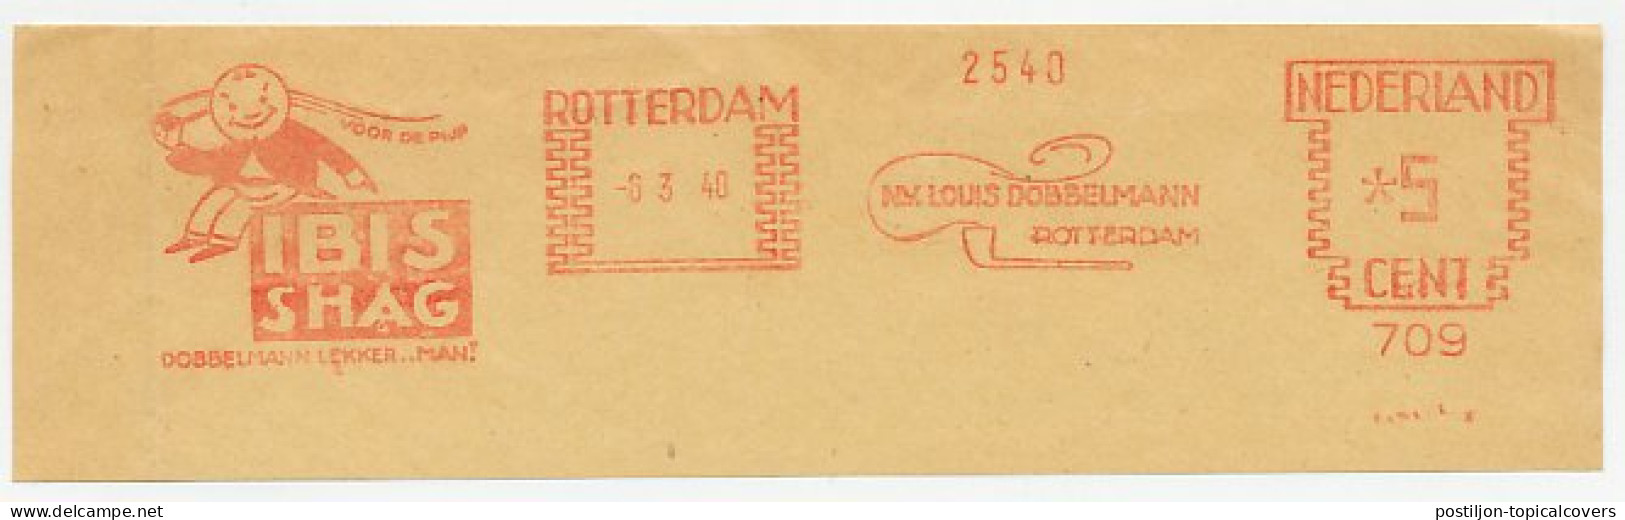 Meter Cut Netherlands 1940 Ibis Shag - Tobacco - Pipe Smoking - Tobacco